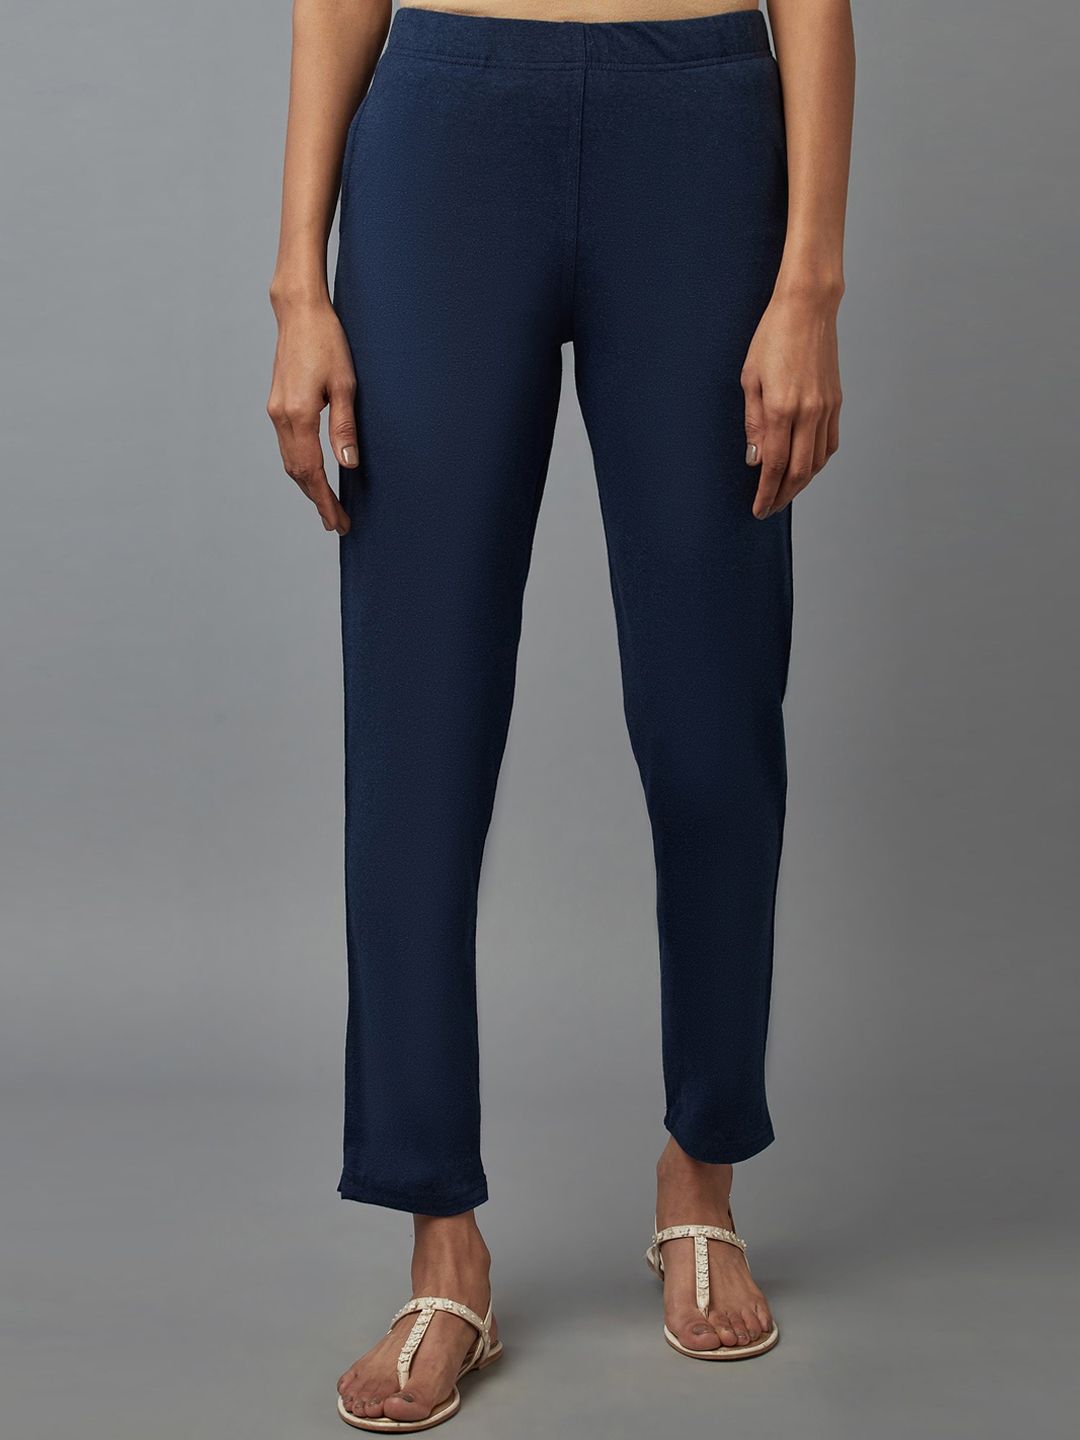 elleven Women Blue Solid Original Regular-Fit Trousers Price in India